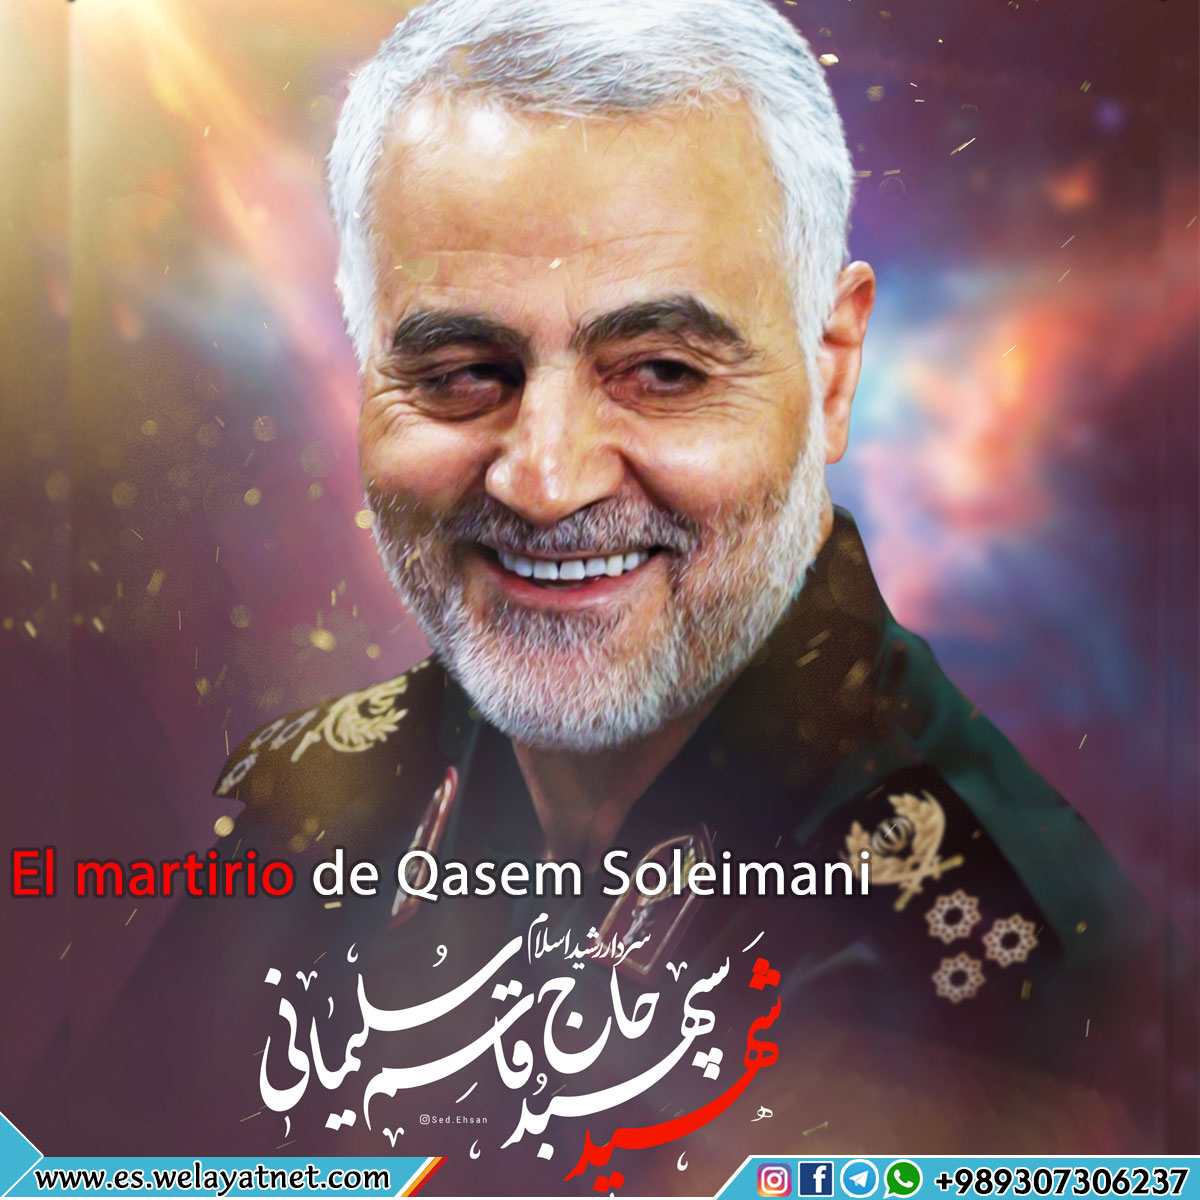 El martirio de Qasem Soleimani